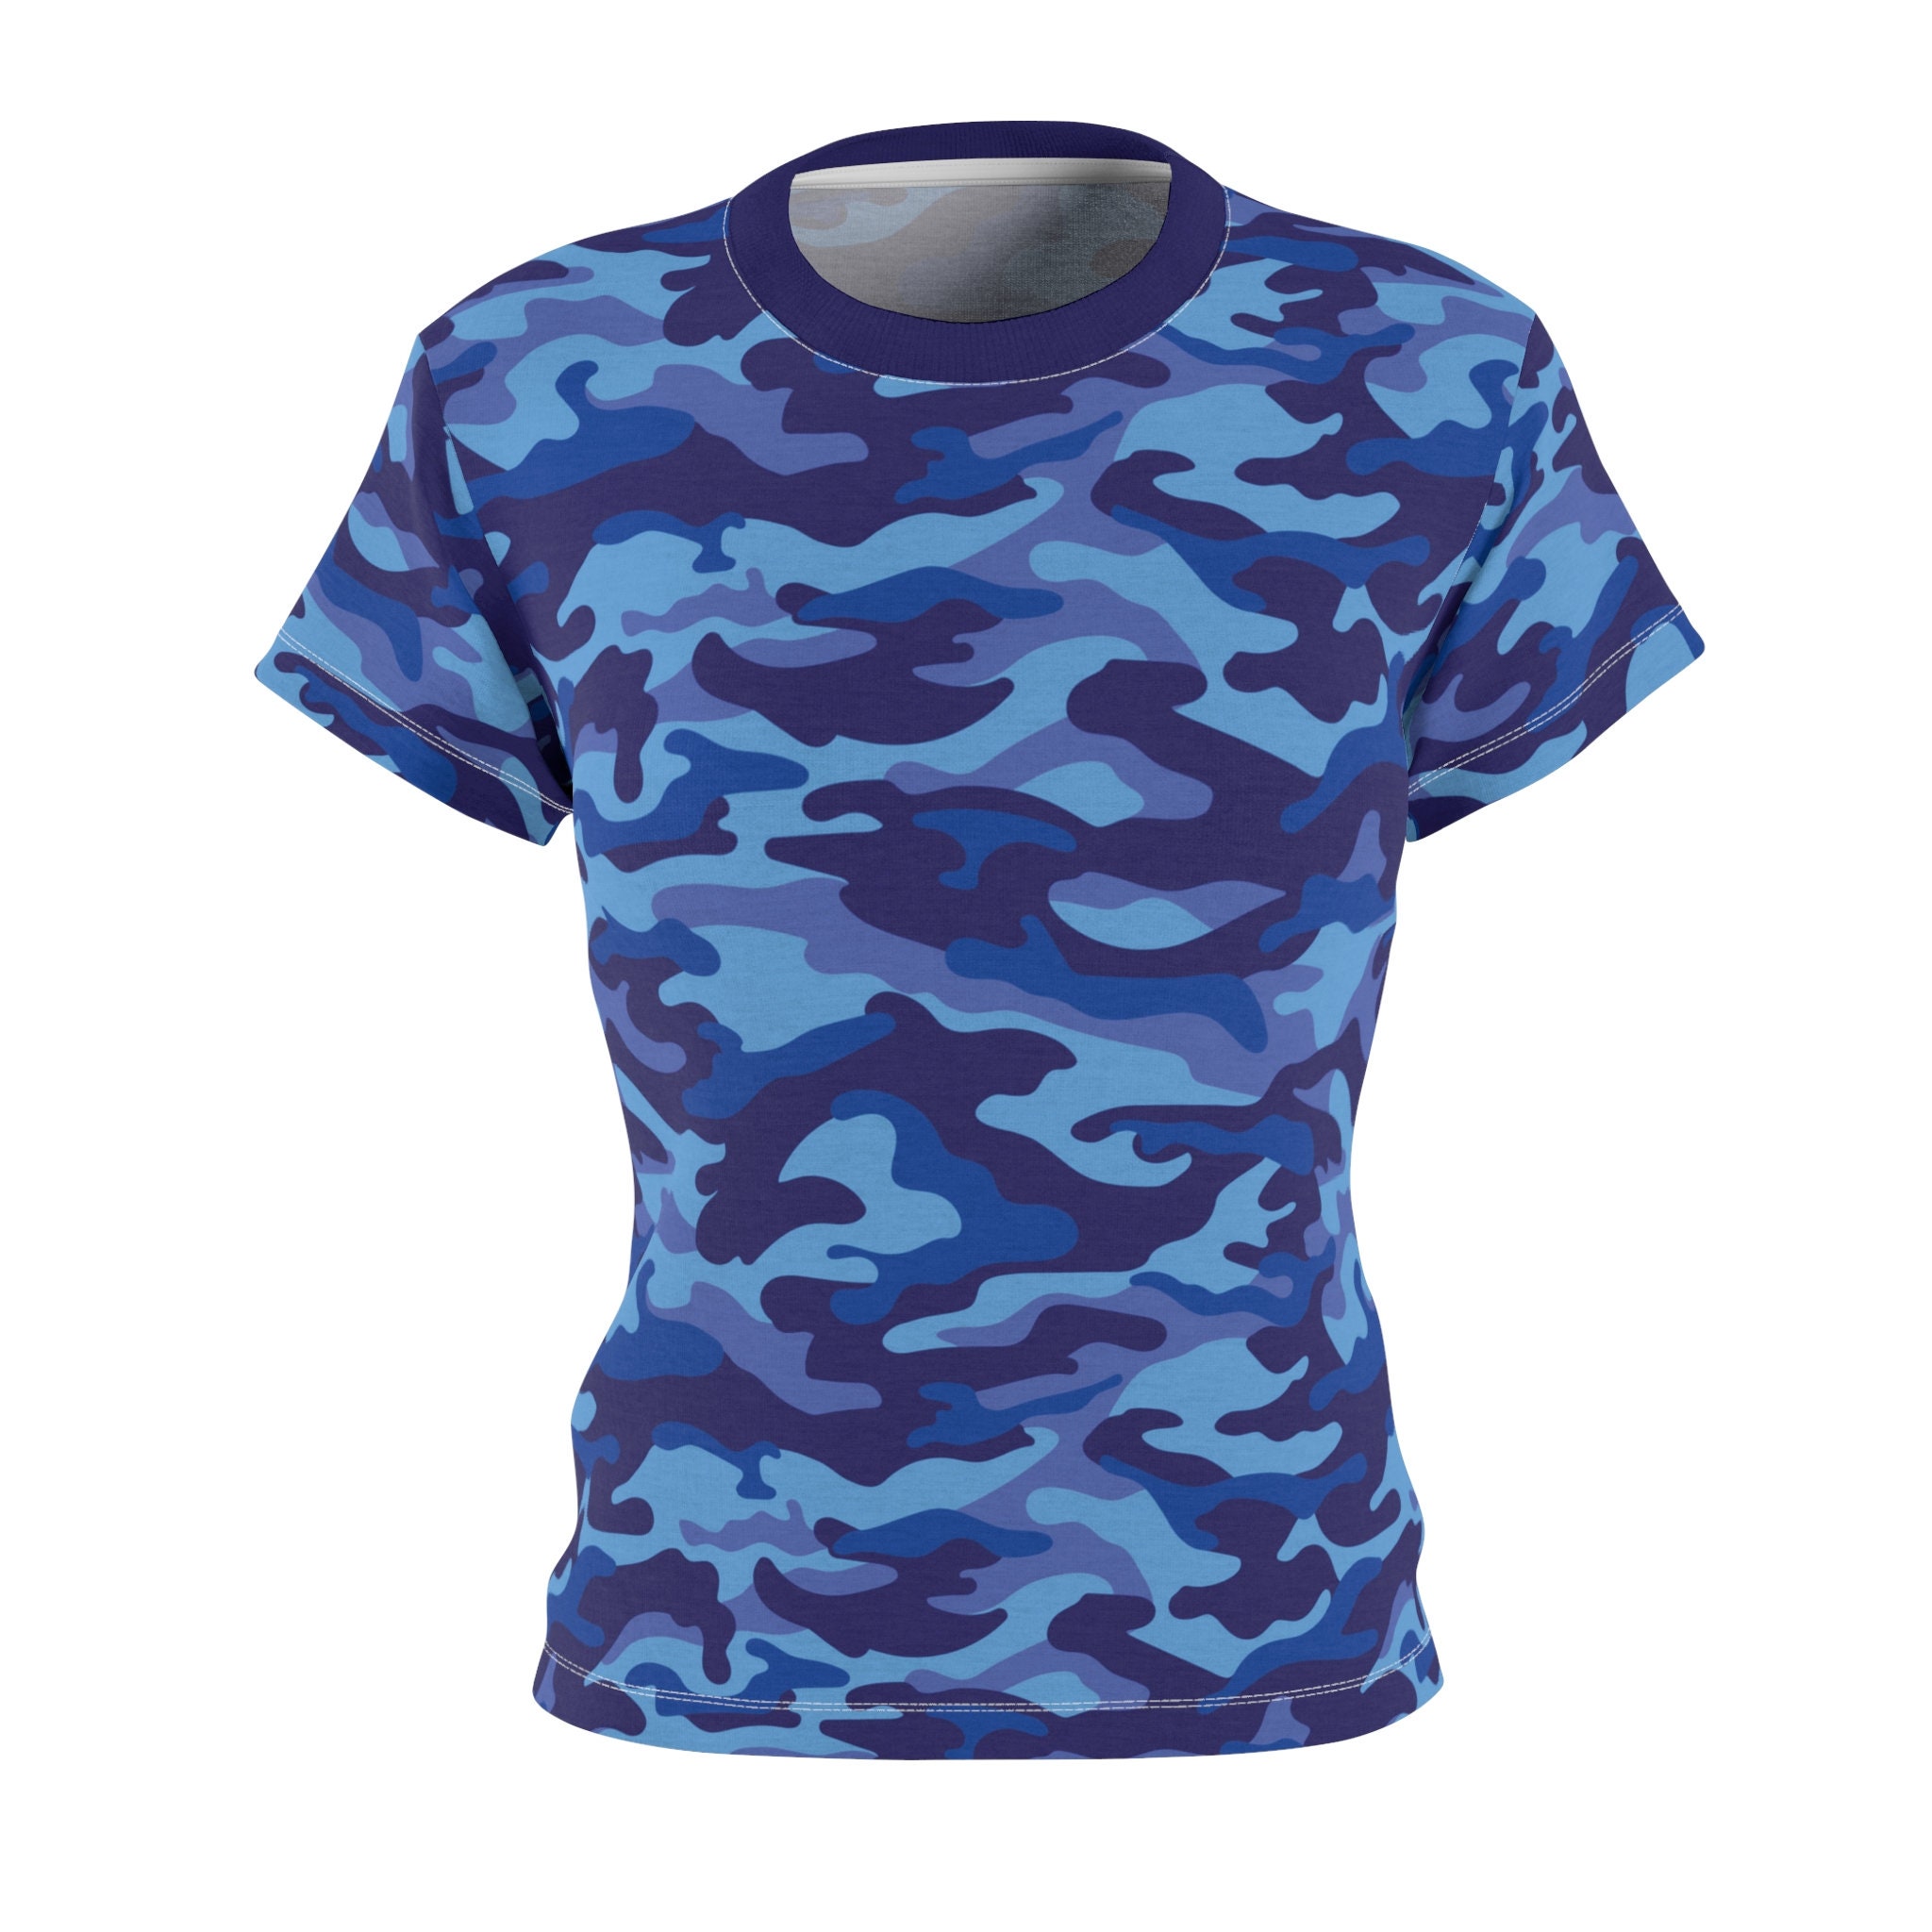 Women's Blue Camo T-shirt Camouflage Blue T-shirt Women's Blue